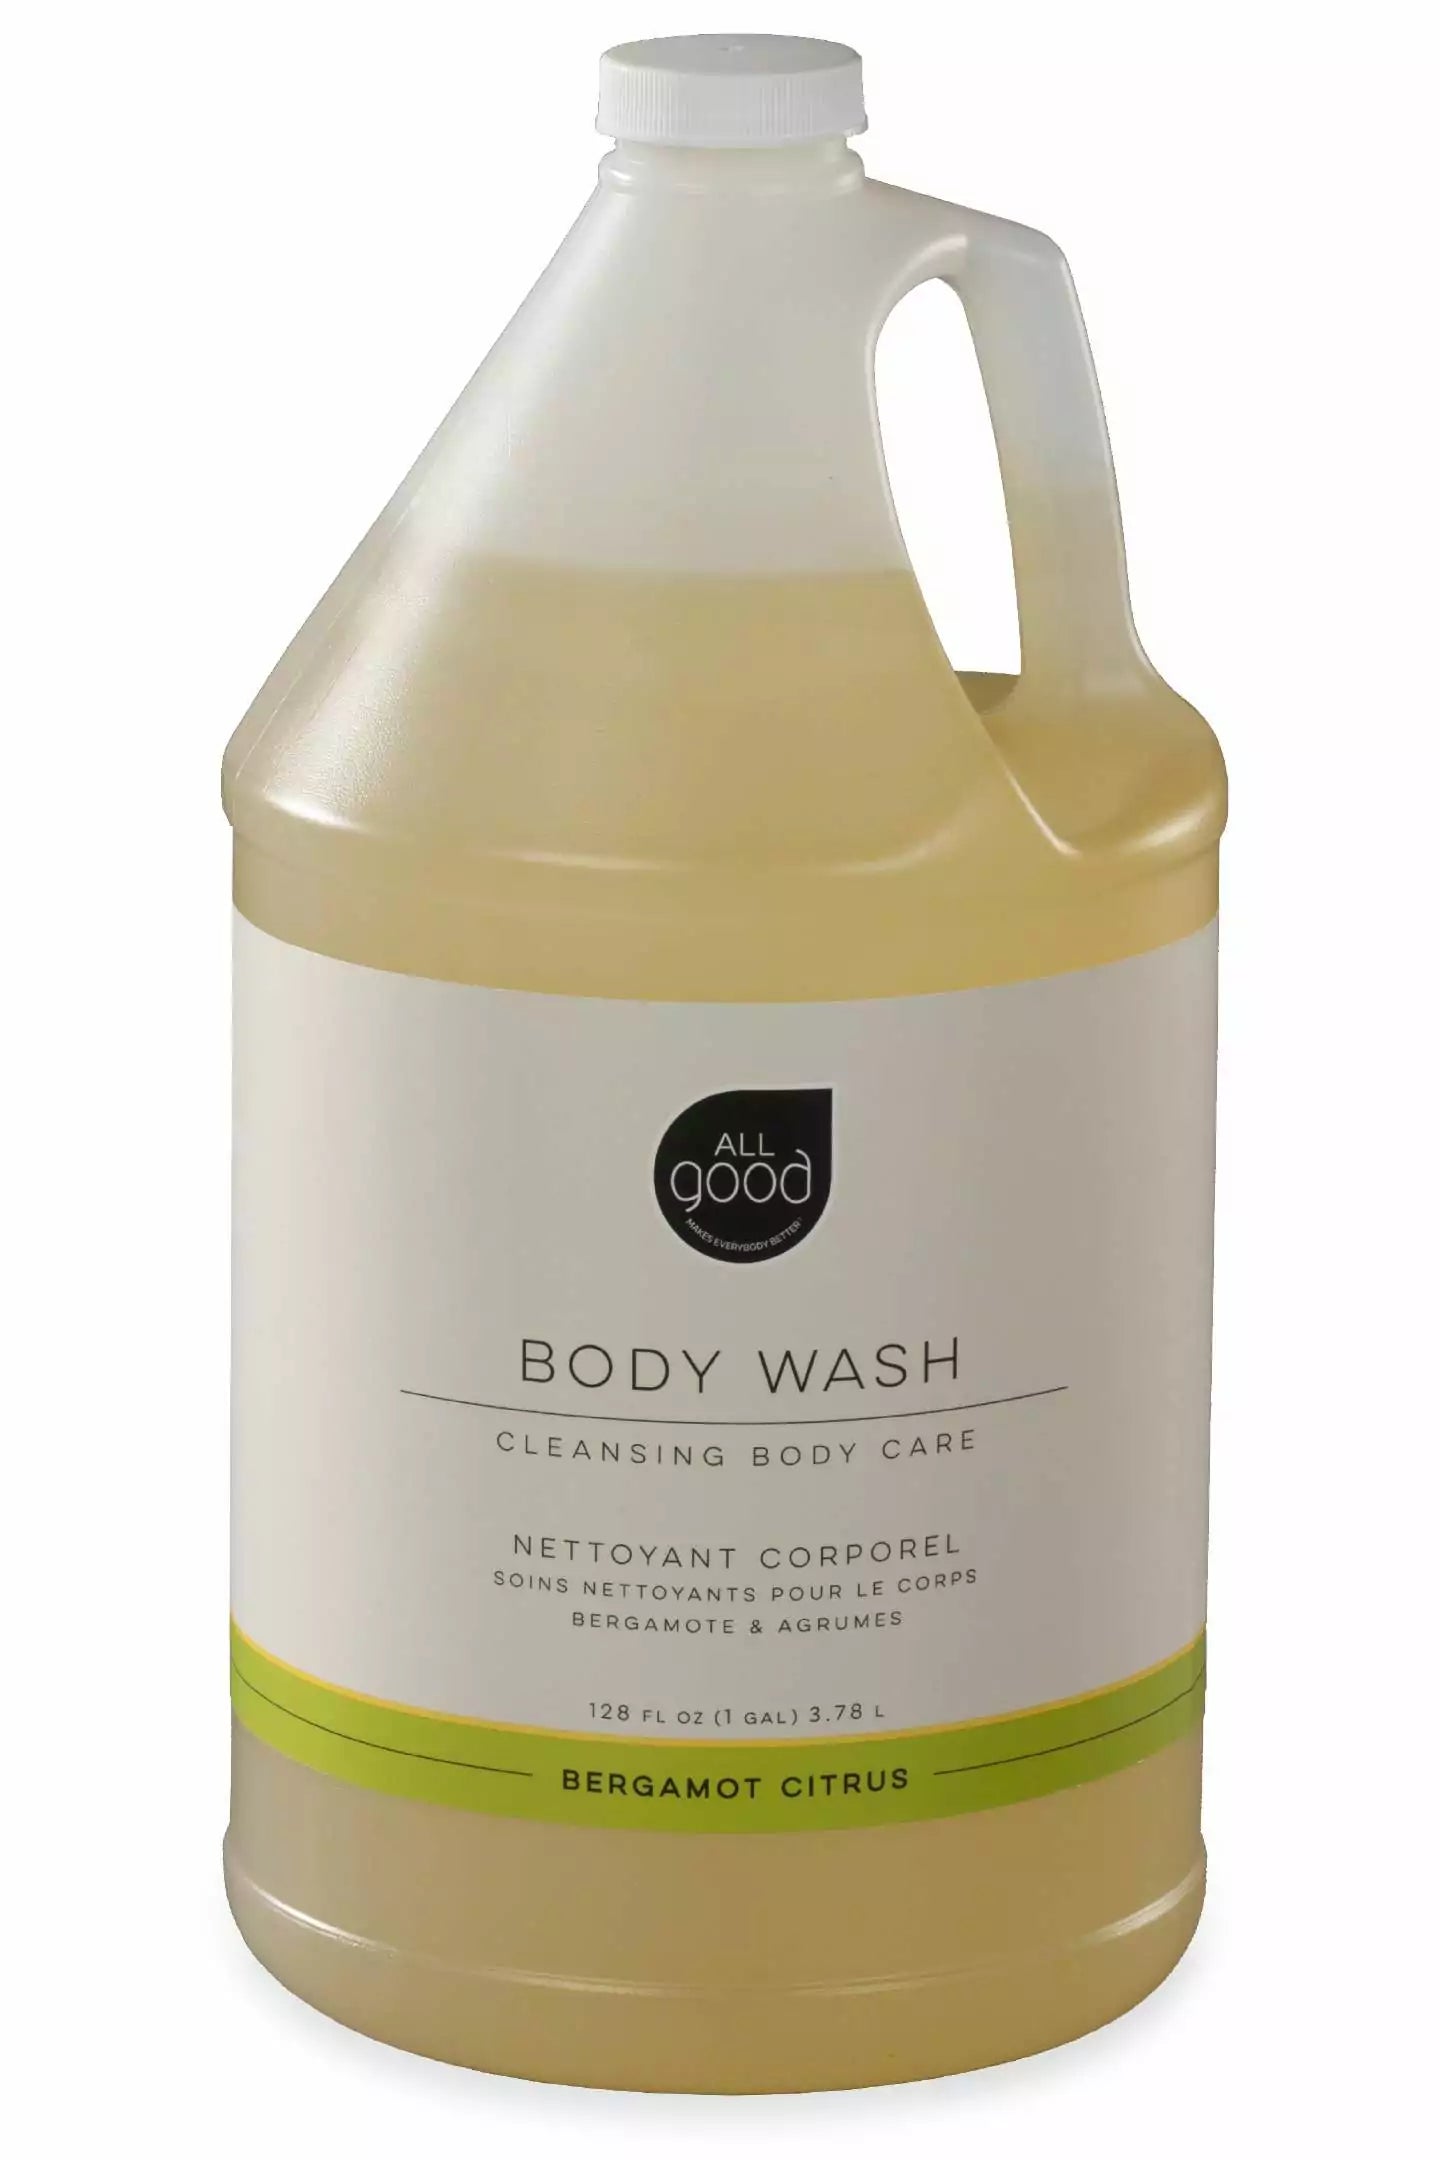 Bergamot Citrus Body Wash 1 Gallon Bottle | Refill at Home